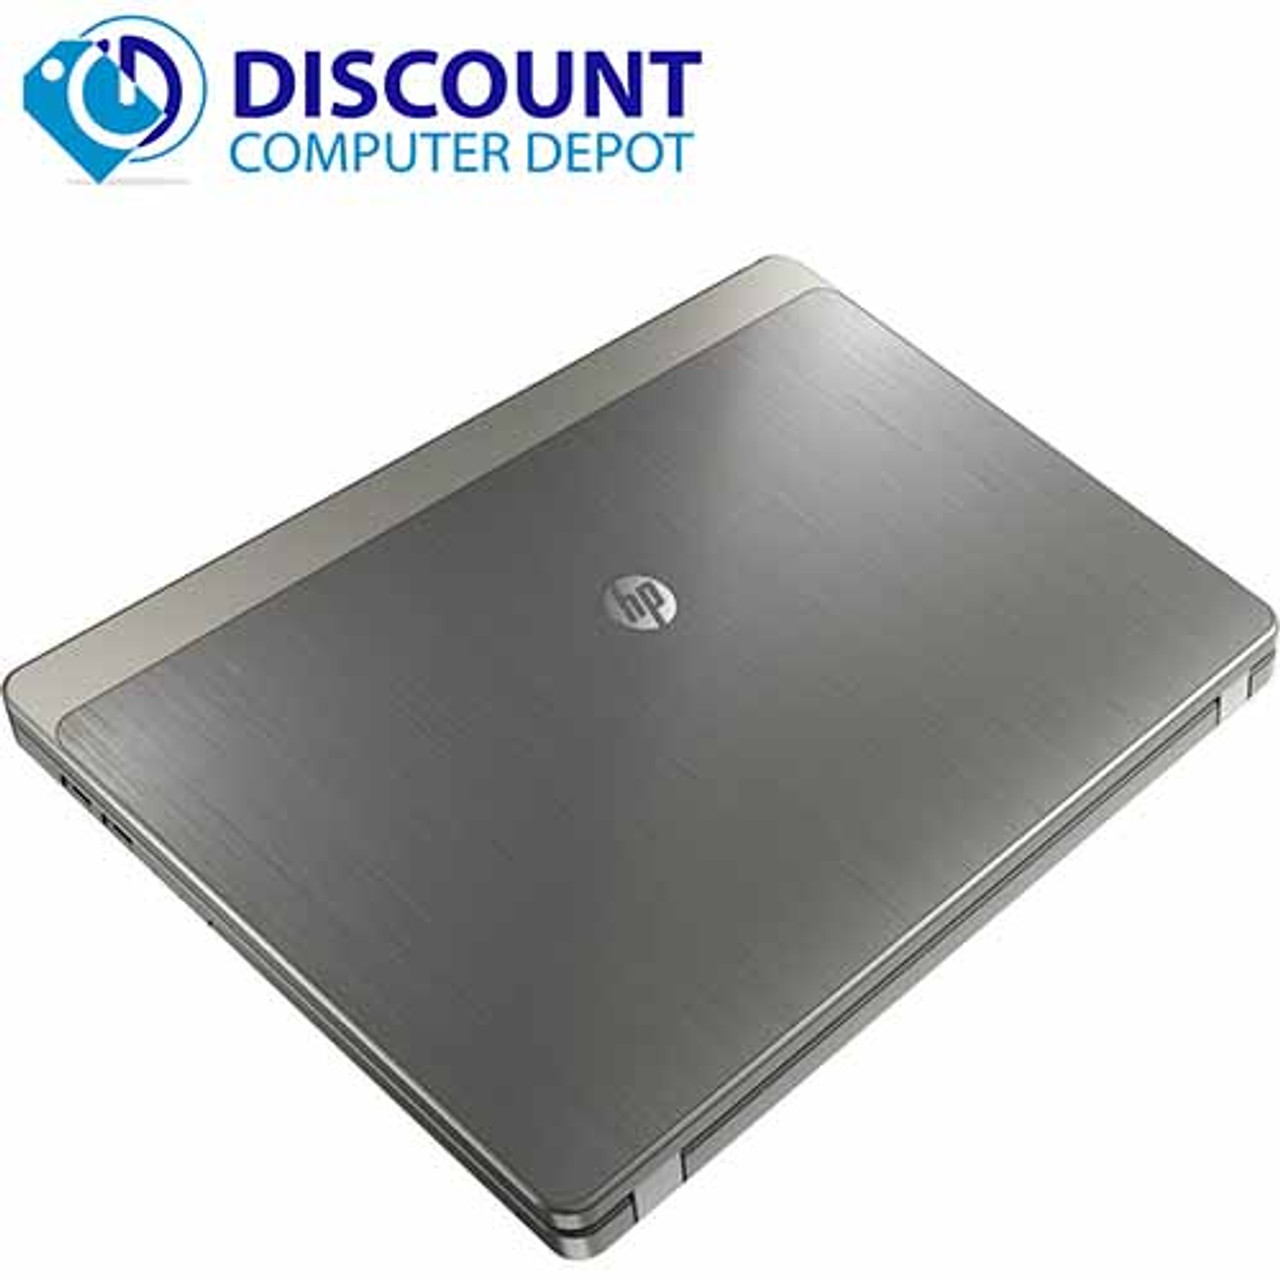 HP Probook 4730s i5 Windows 10 Pro 17.3 Laptop Computer 8GB RAM 500GB HD  DVDRW and WIFI